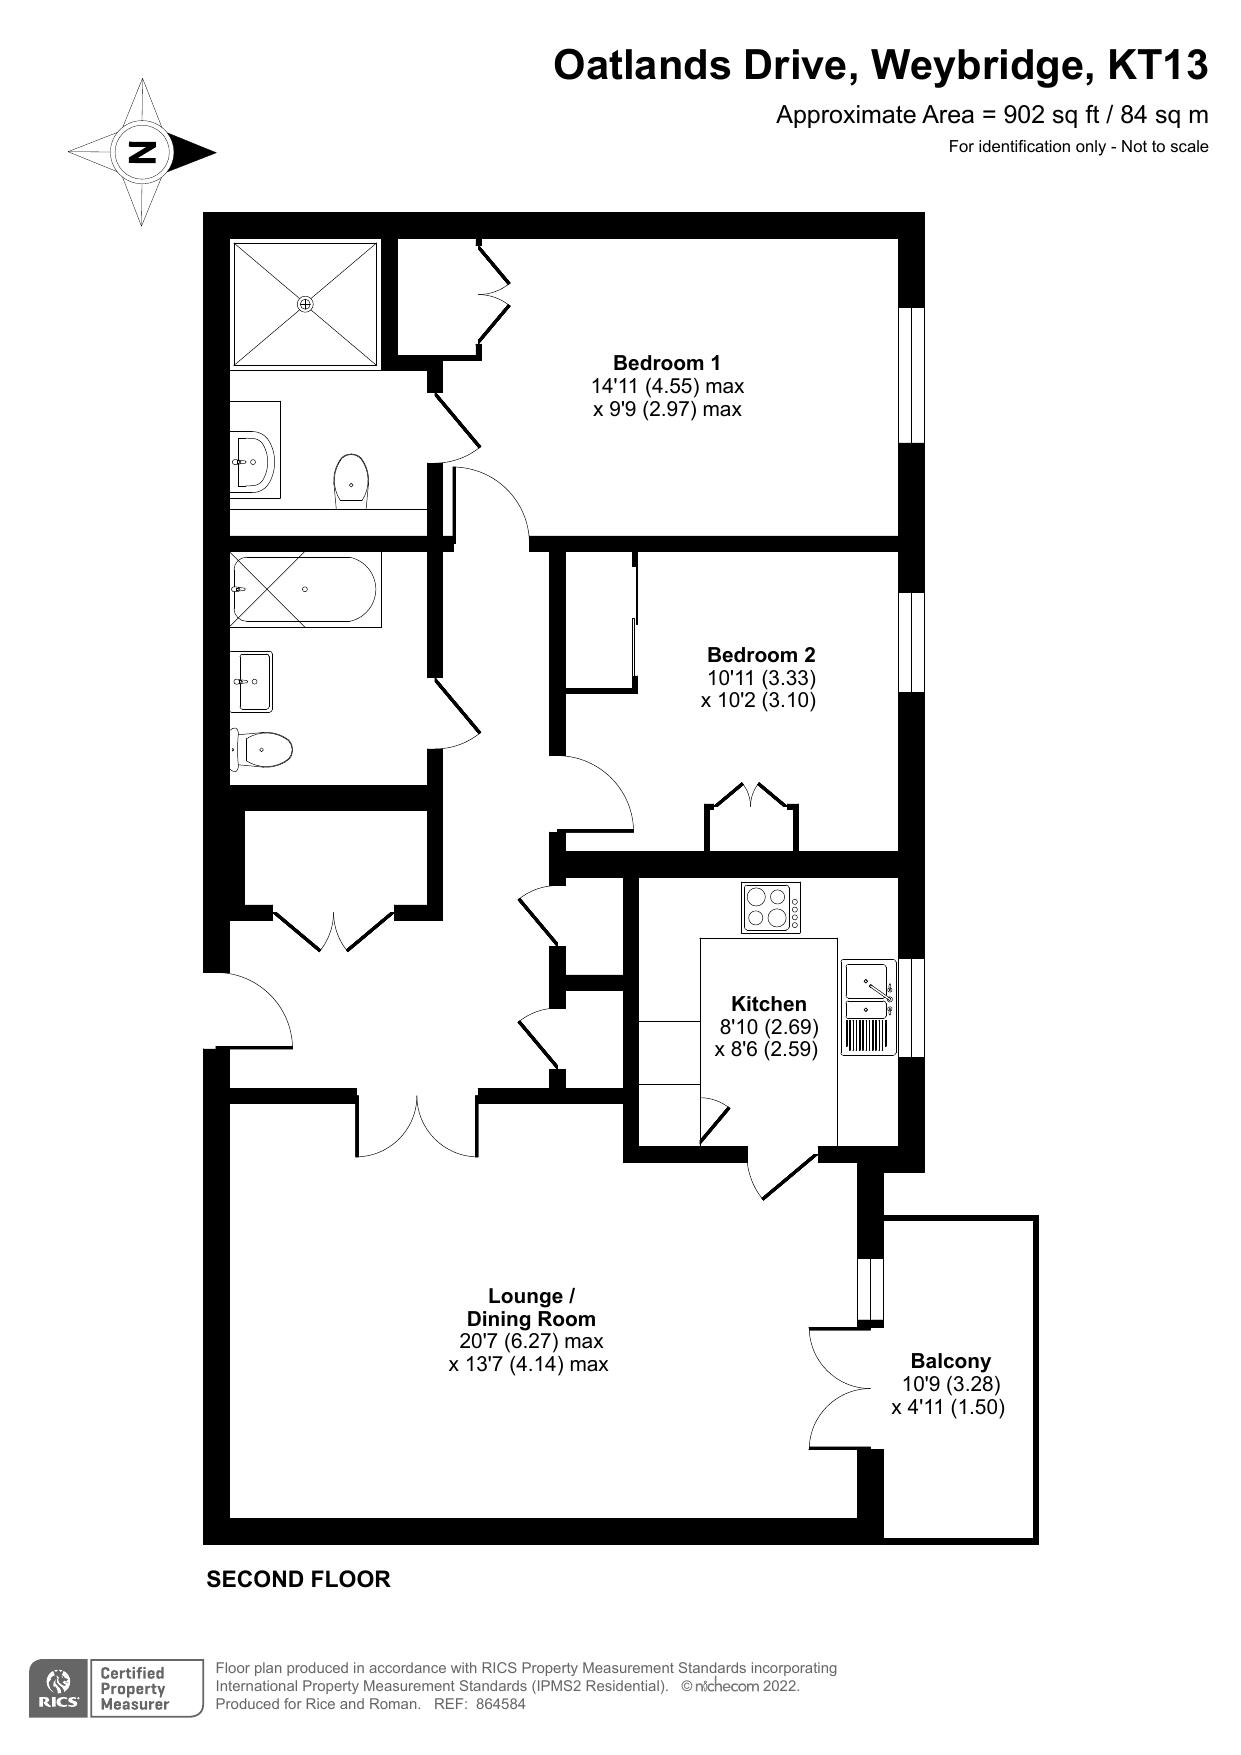 Floorplan - 2 Bedroom Apartment, Austin Place – Weybridge